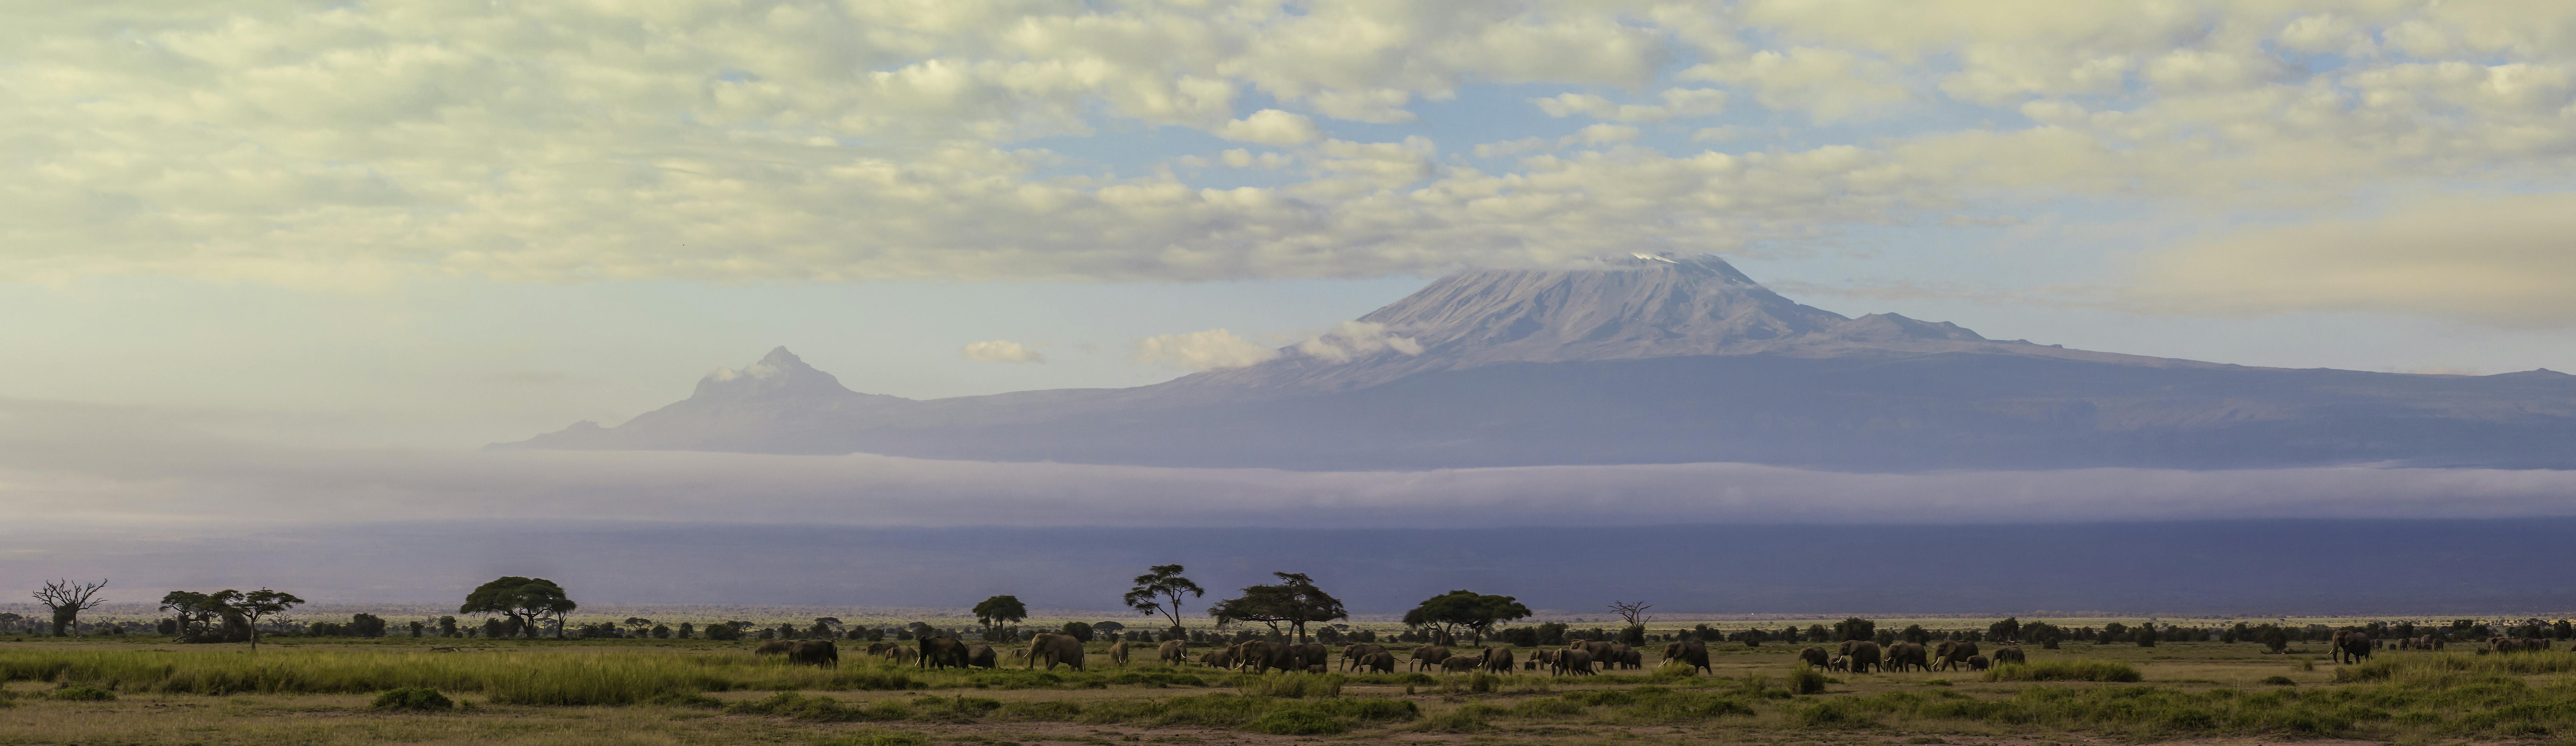 Dagwandeling op de Kilimanjaro vanuit Arusha